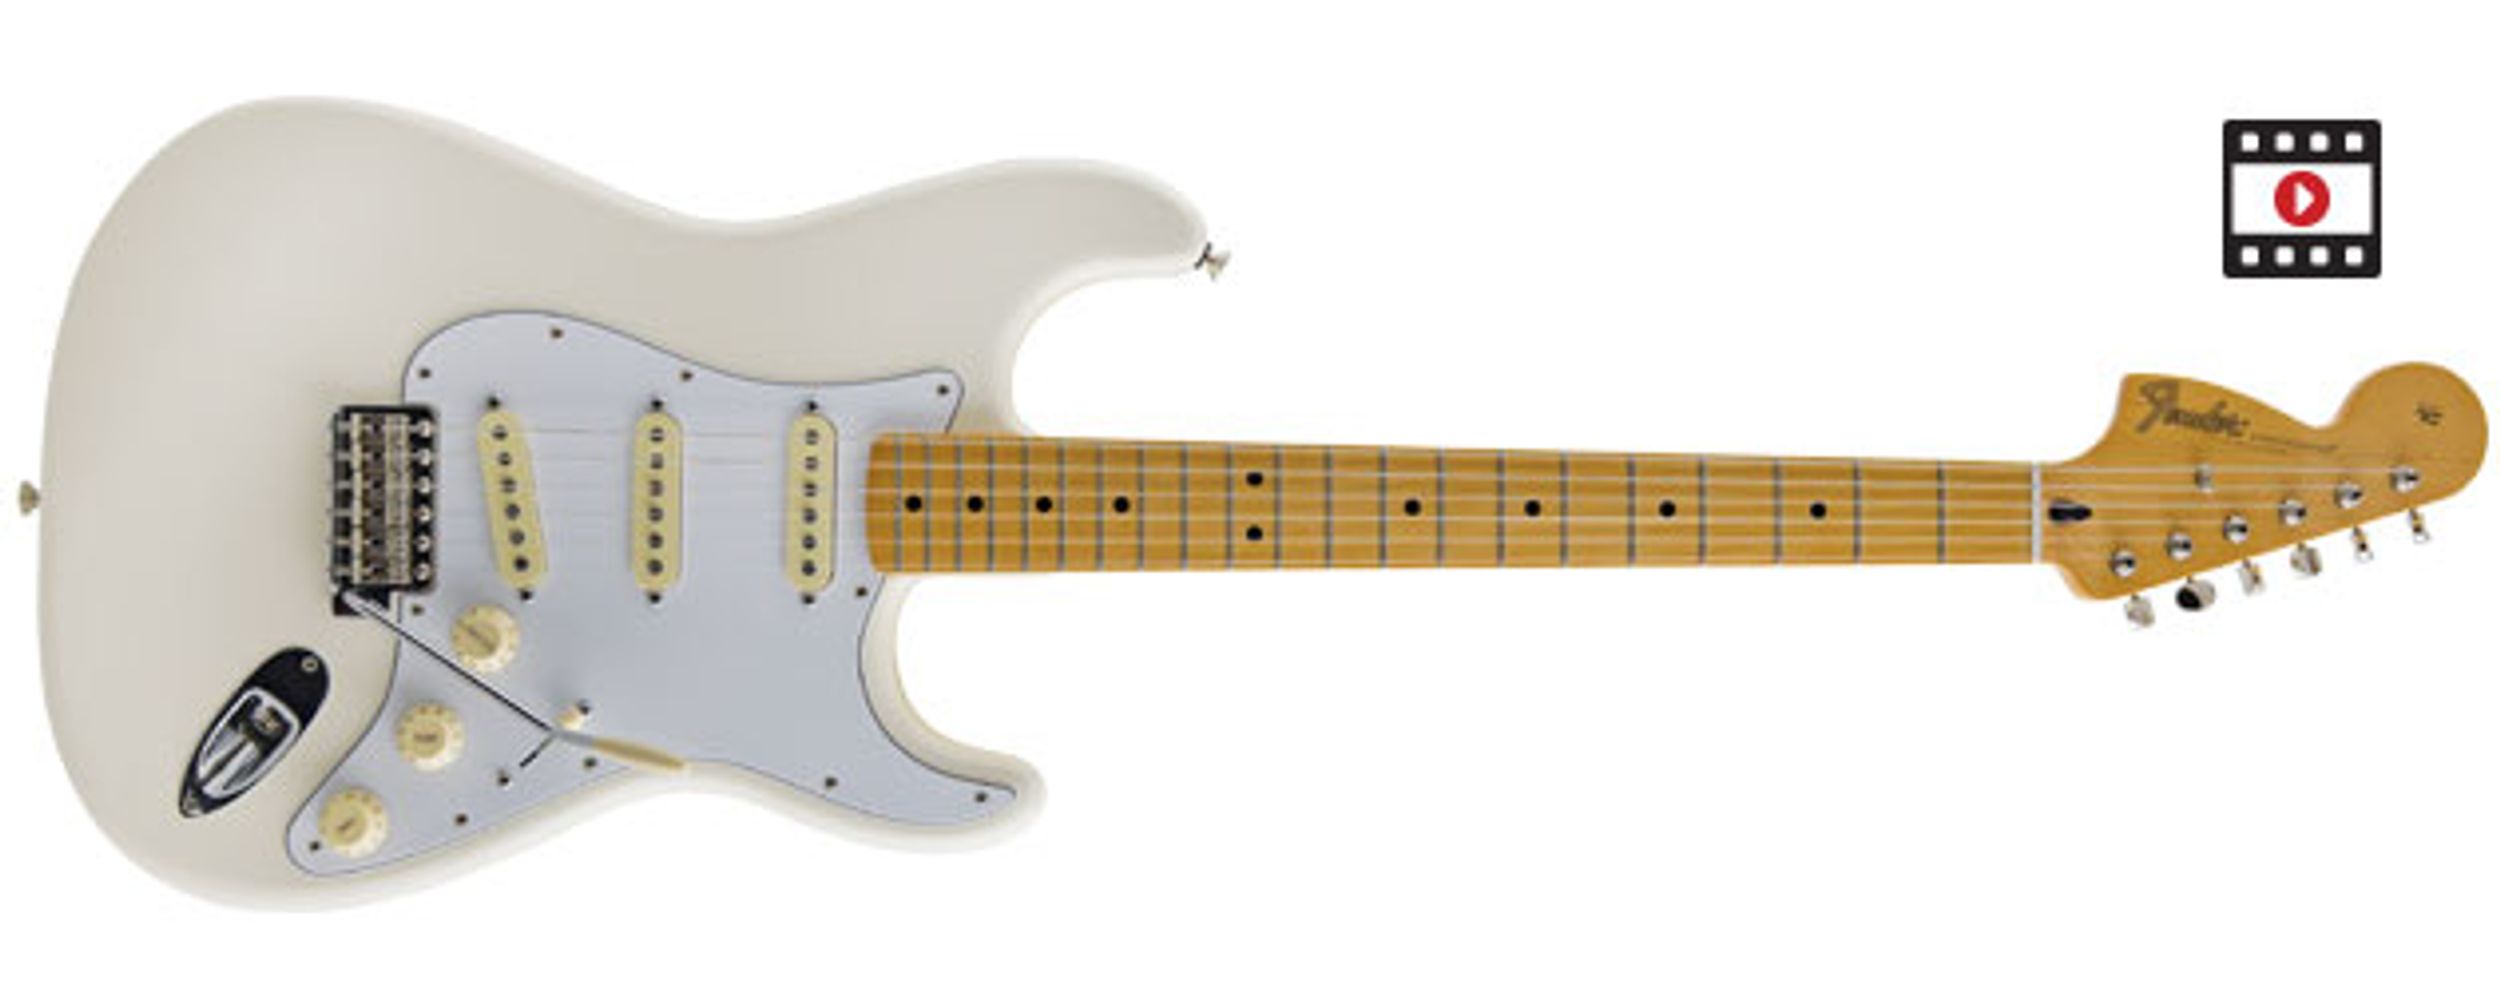 Fender Jimi Hendrix Stratocaster Review